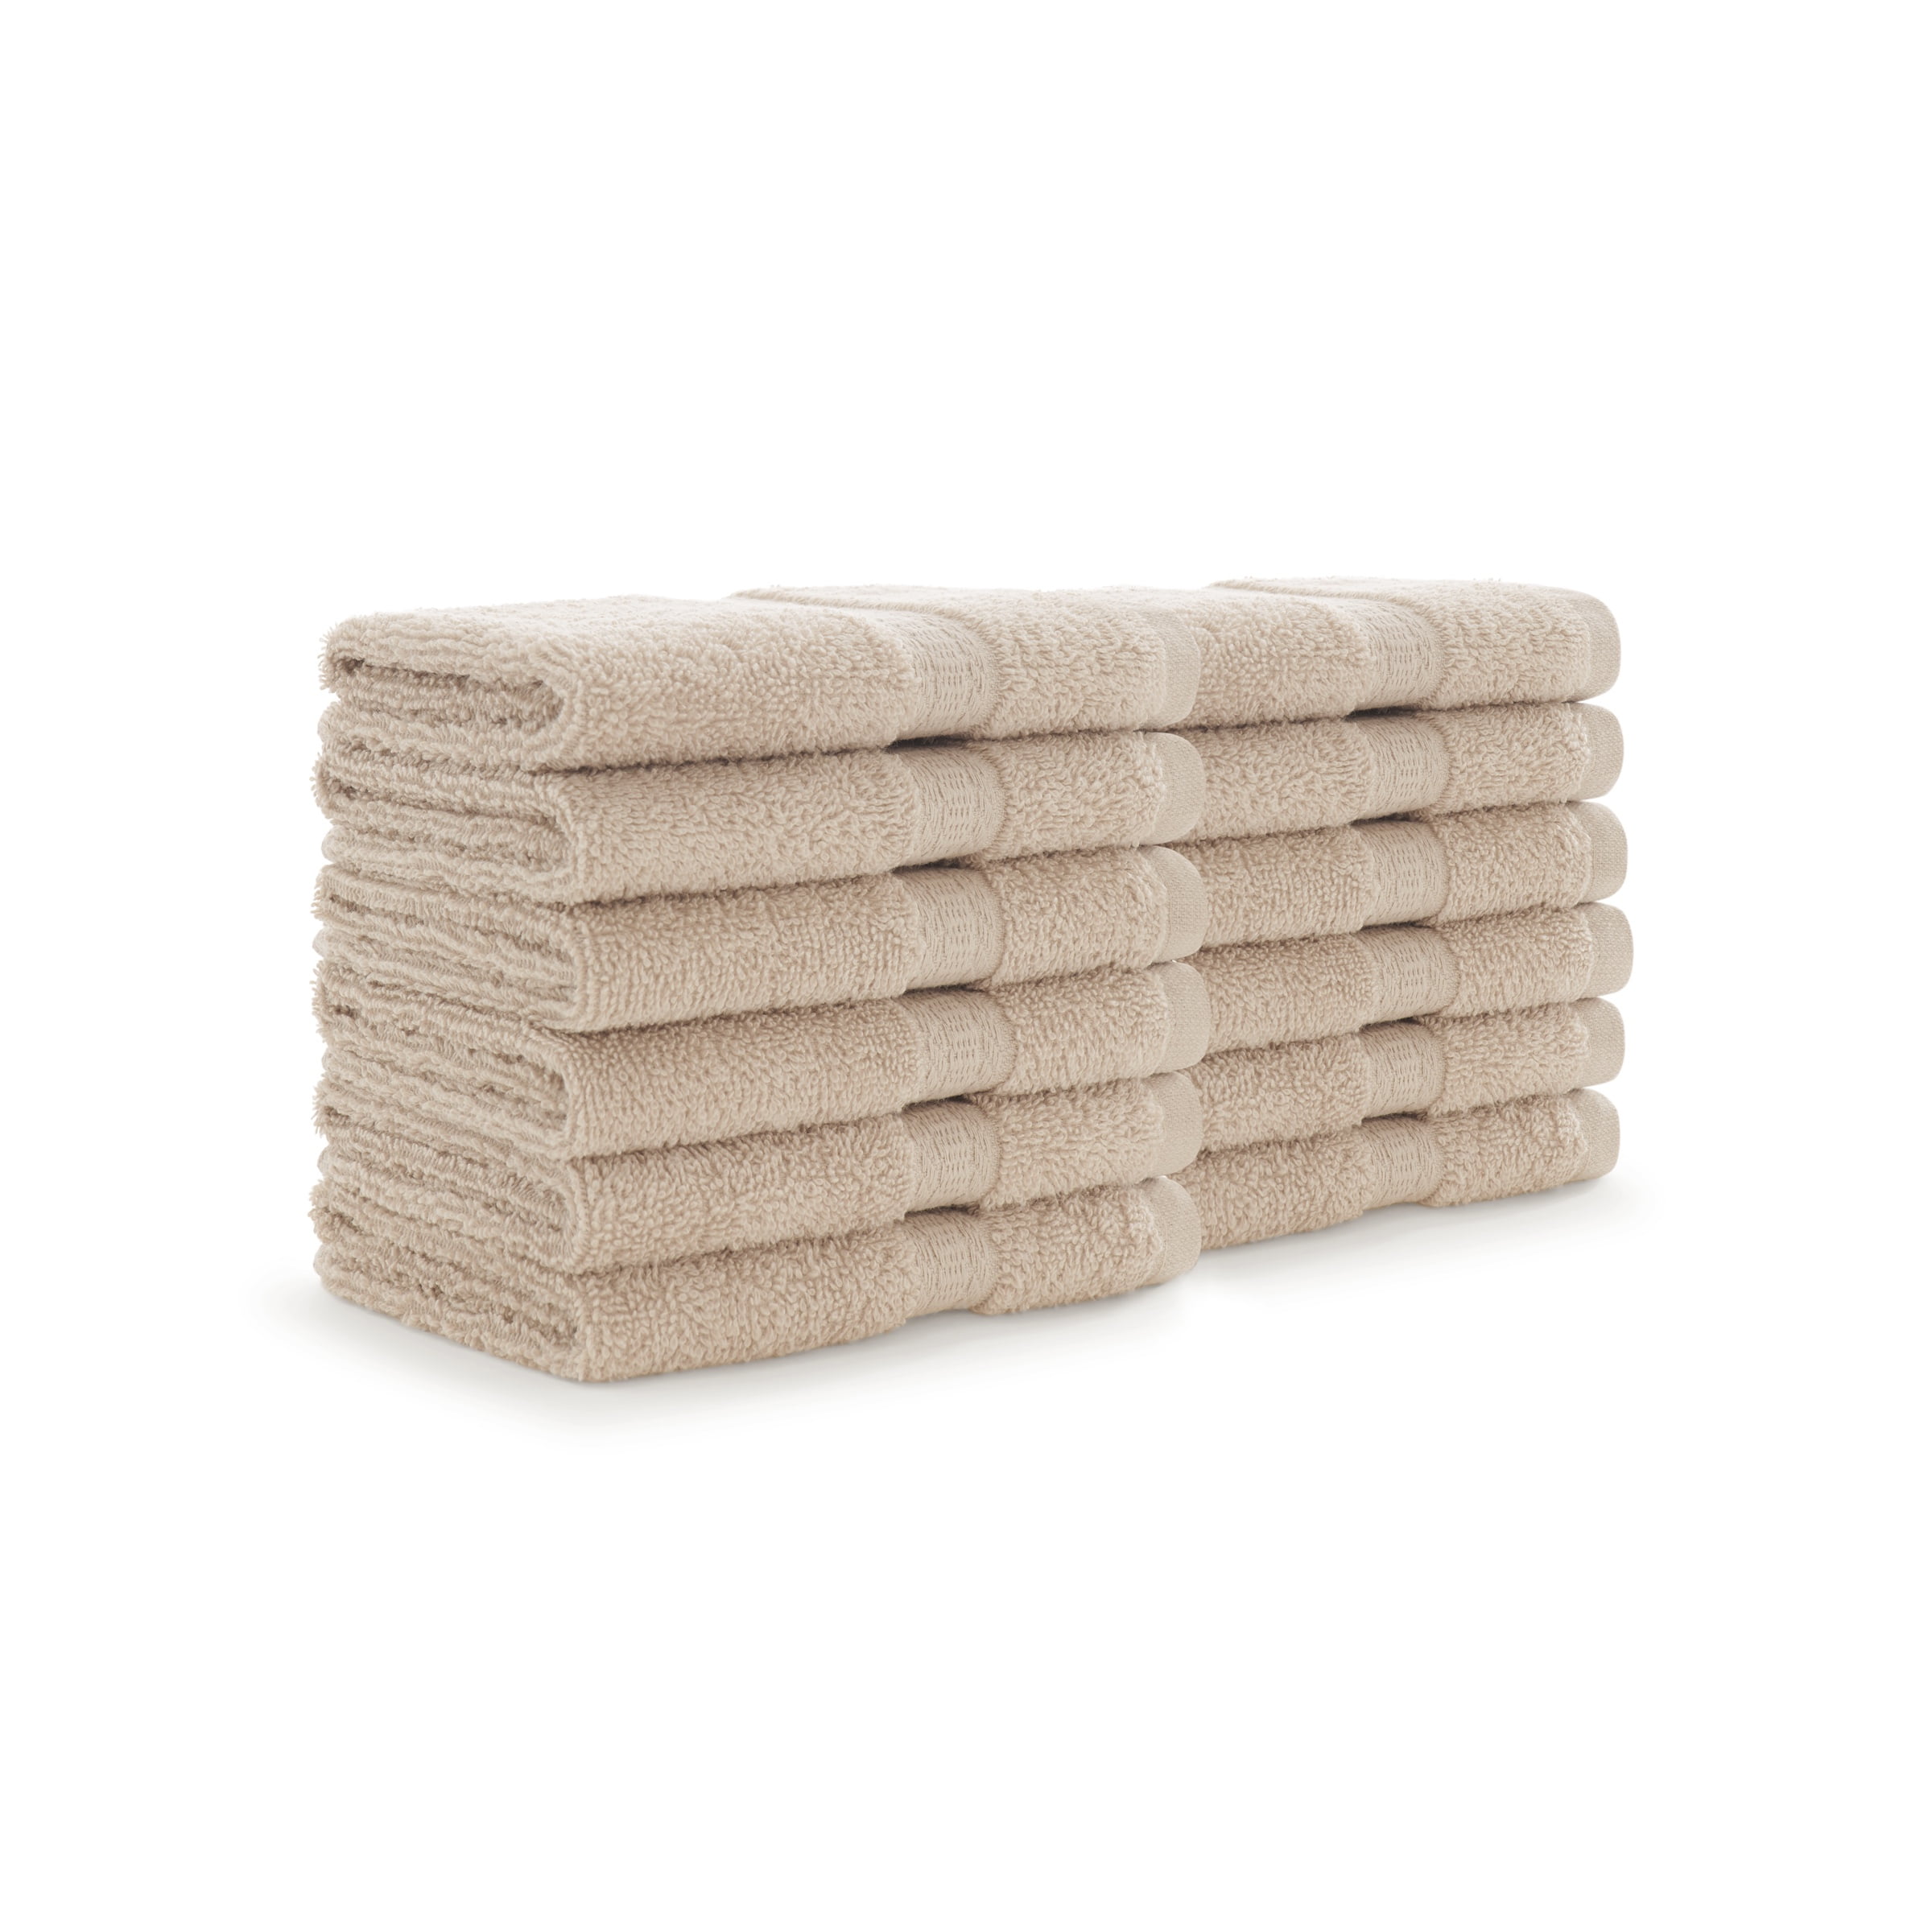 Arkwright Bulk Case of 24 Bath Towels, 25x52, 100% Heavy Cotton, Beige 